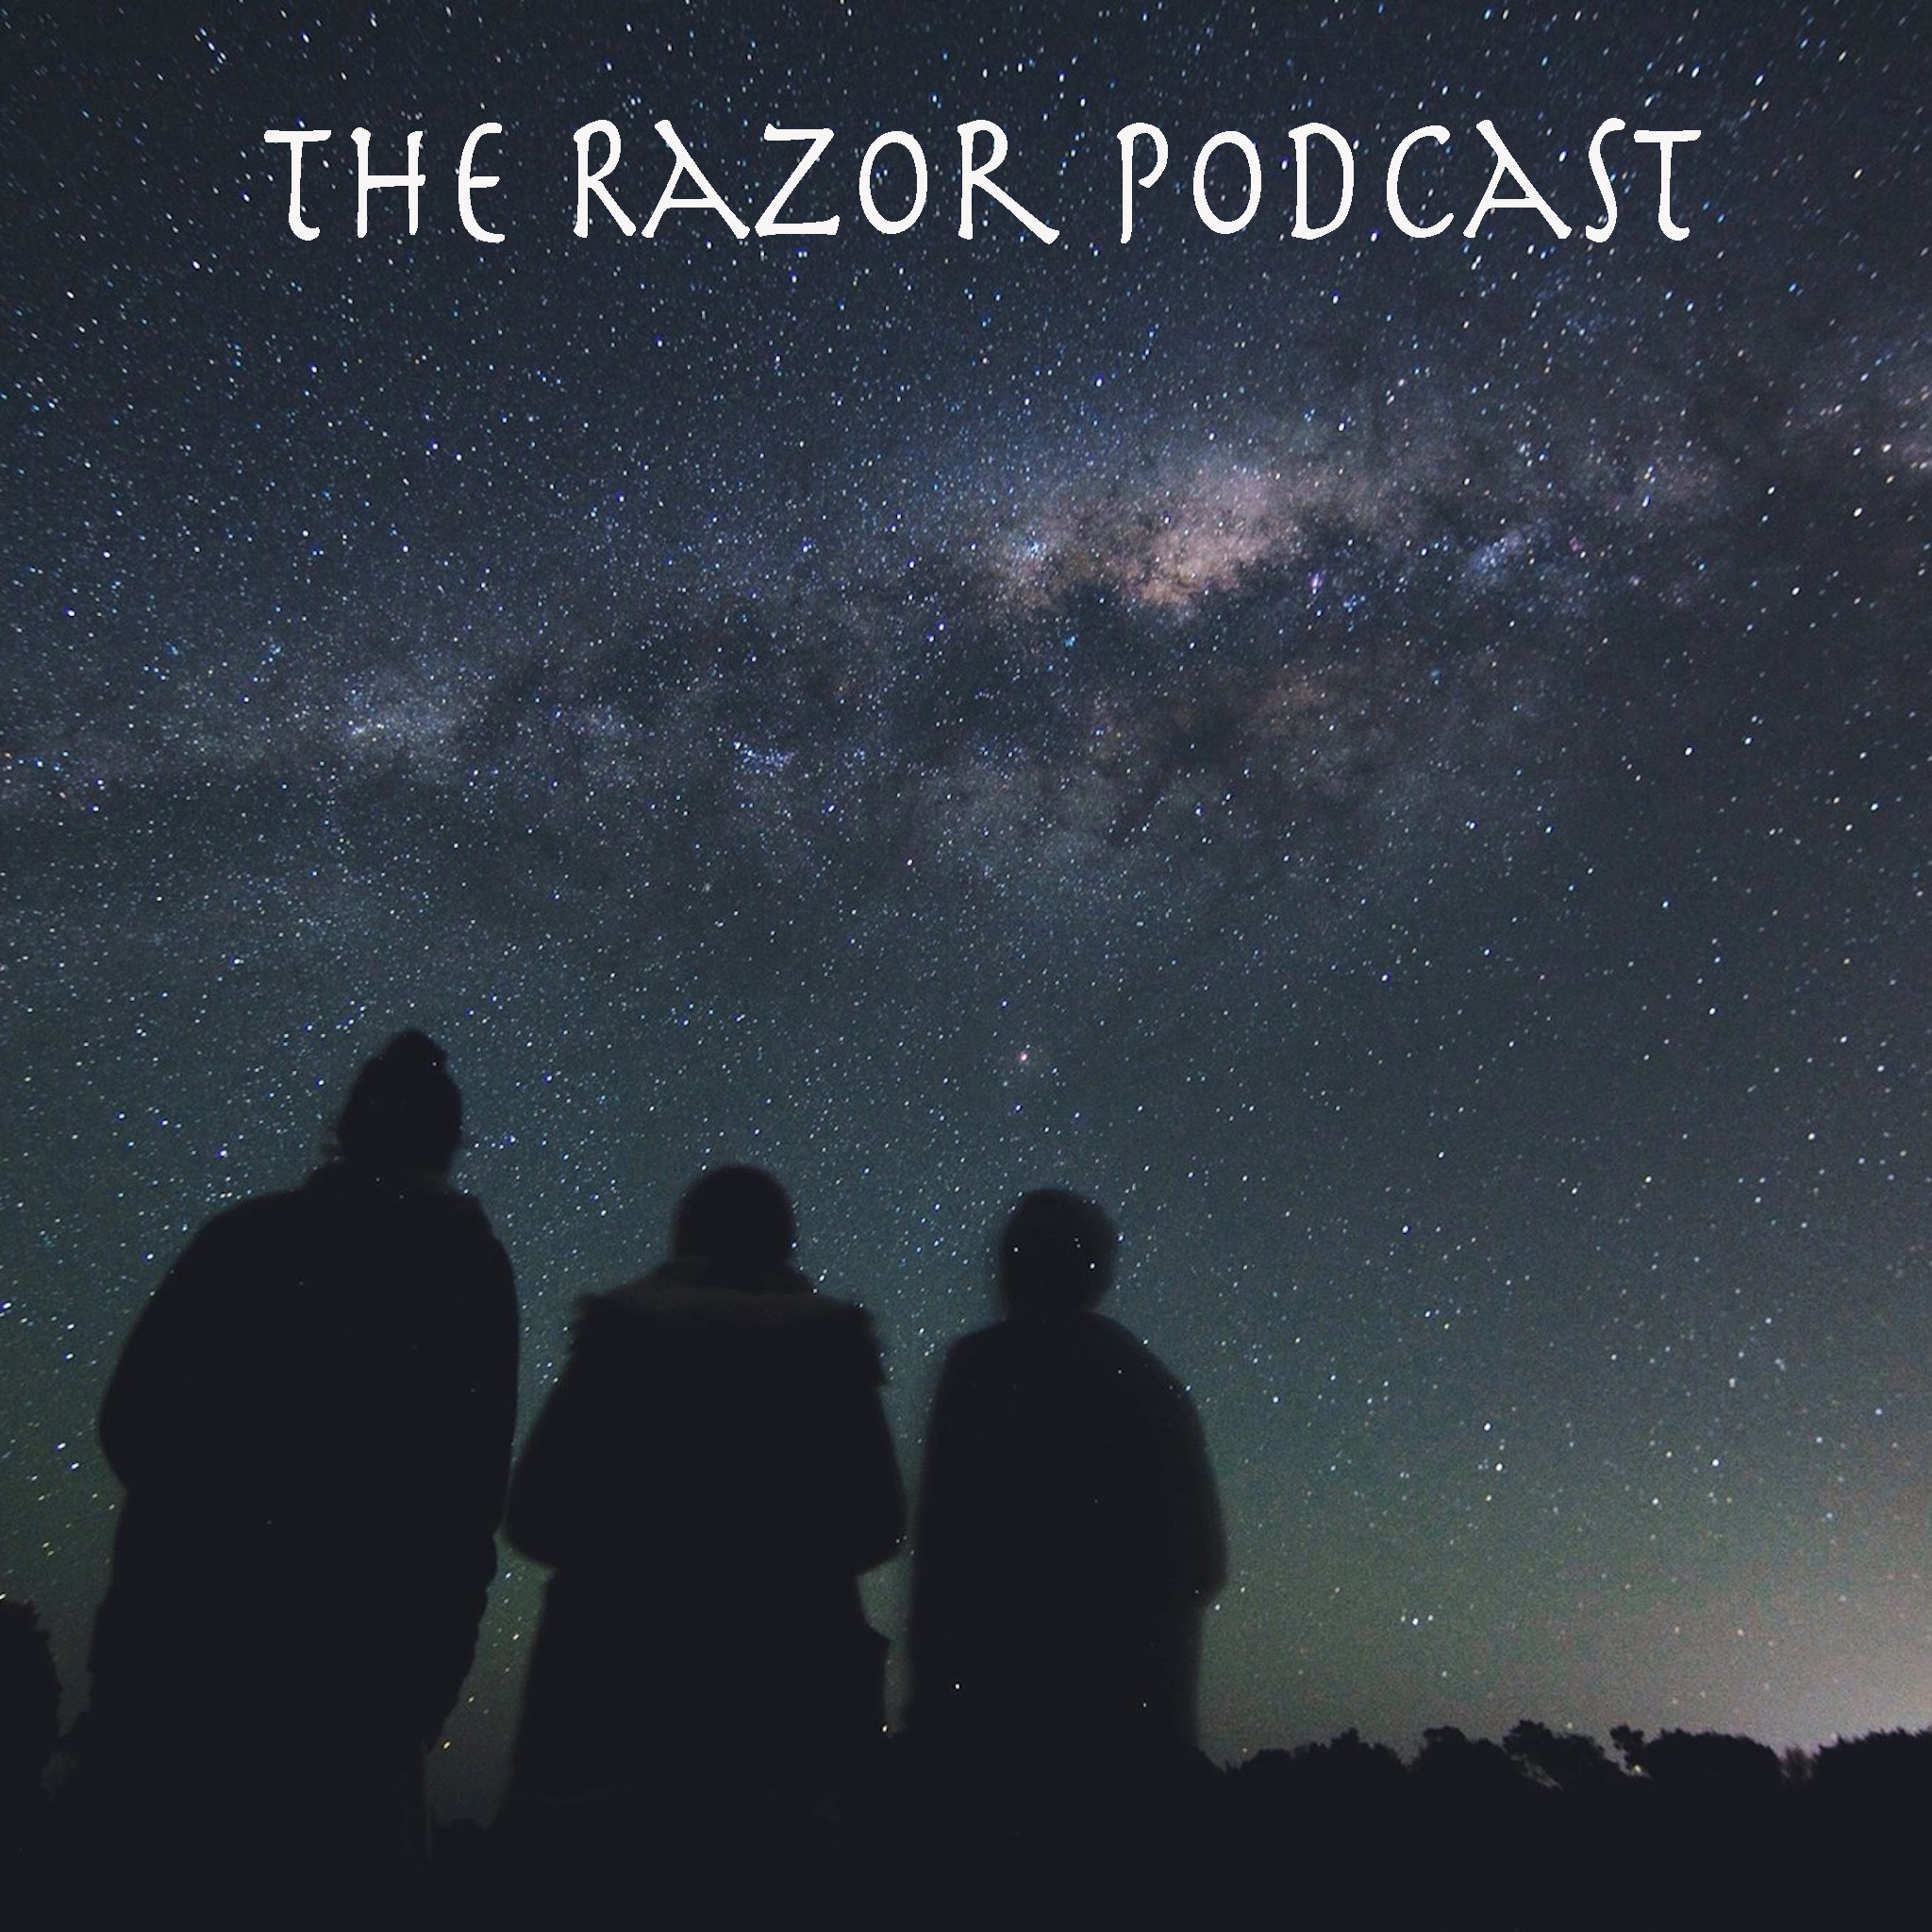 The Razor Podcast